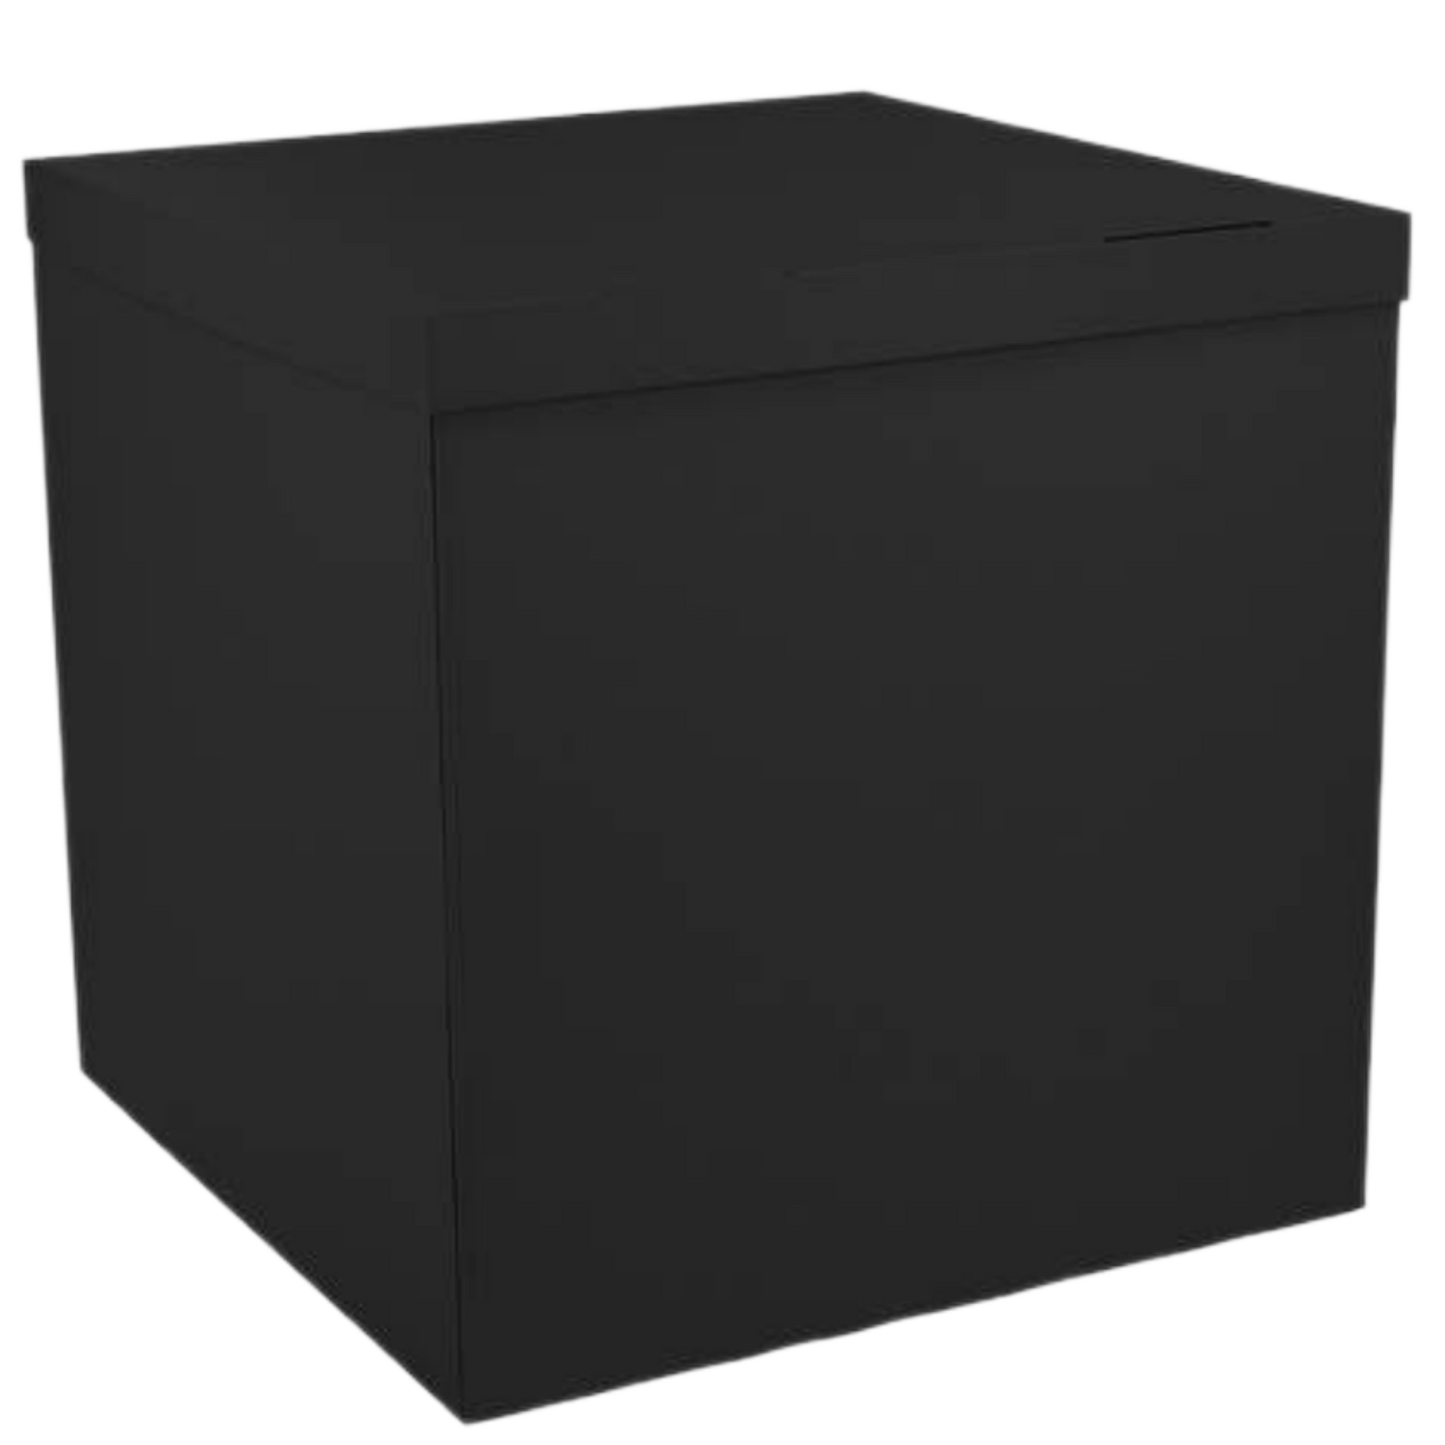 Surprise cardboard balloon box - Black